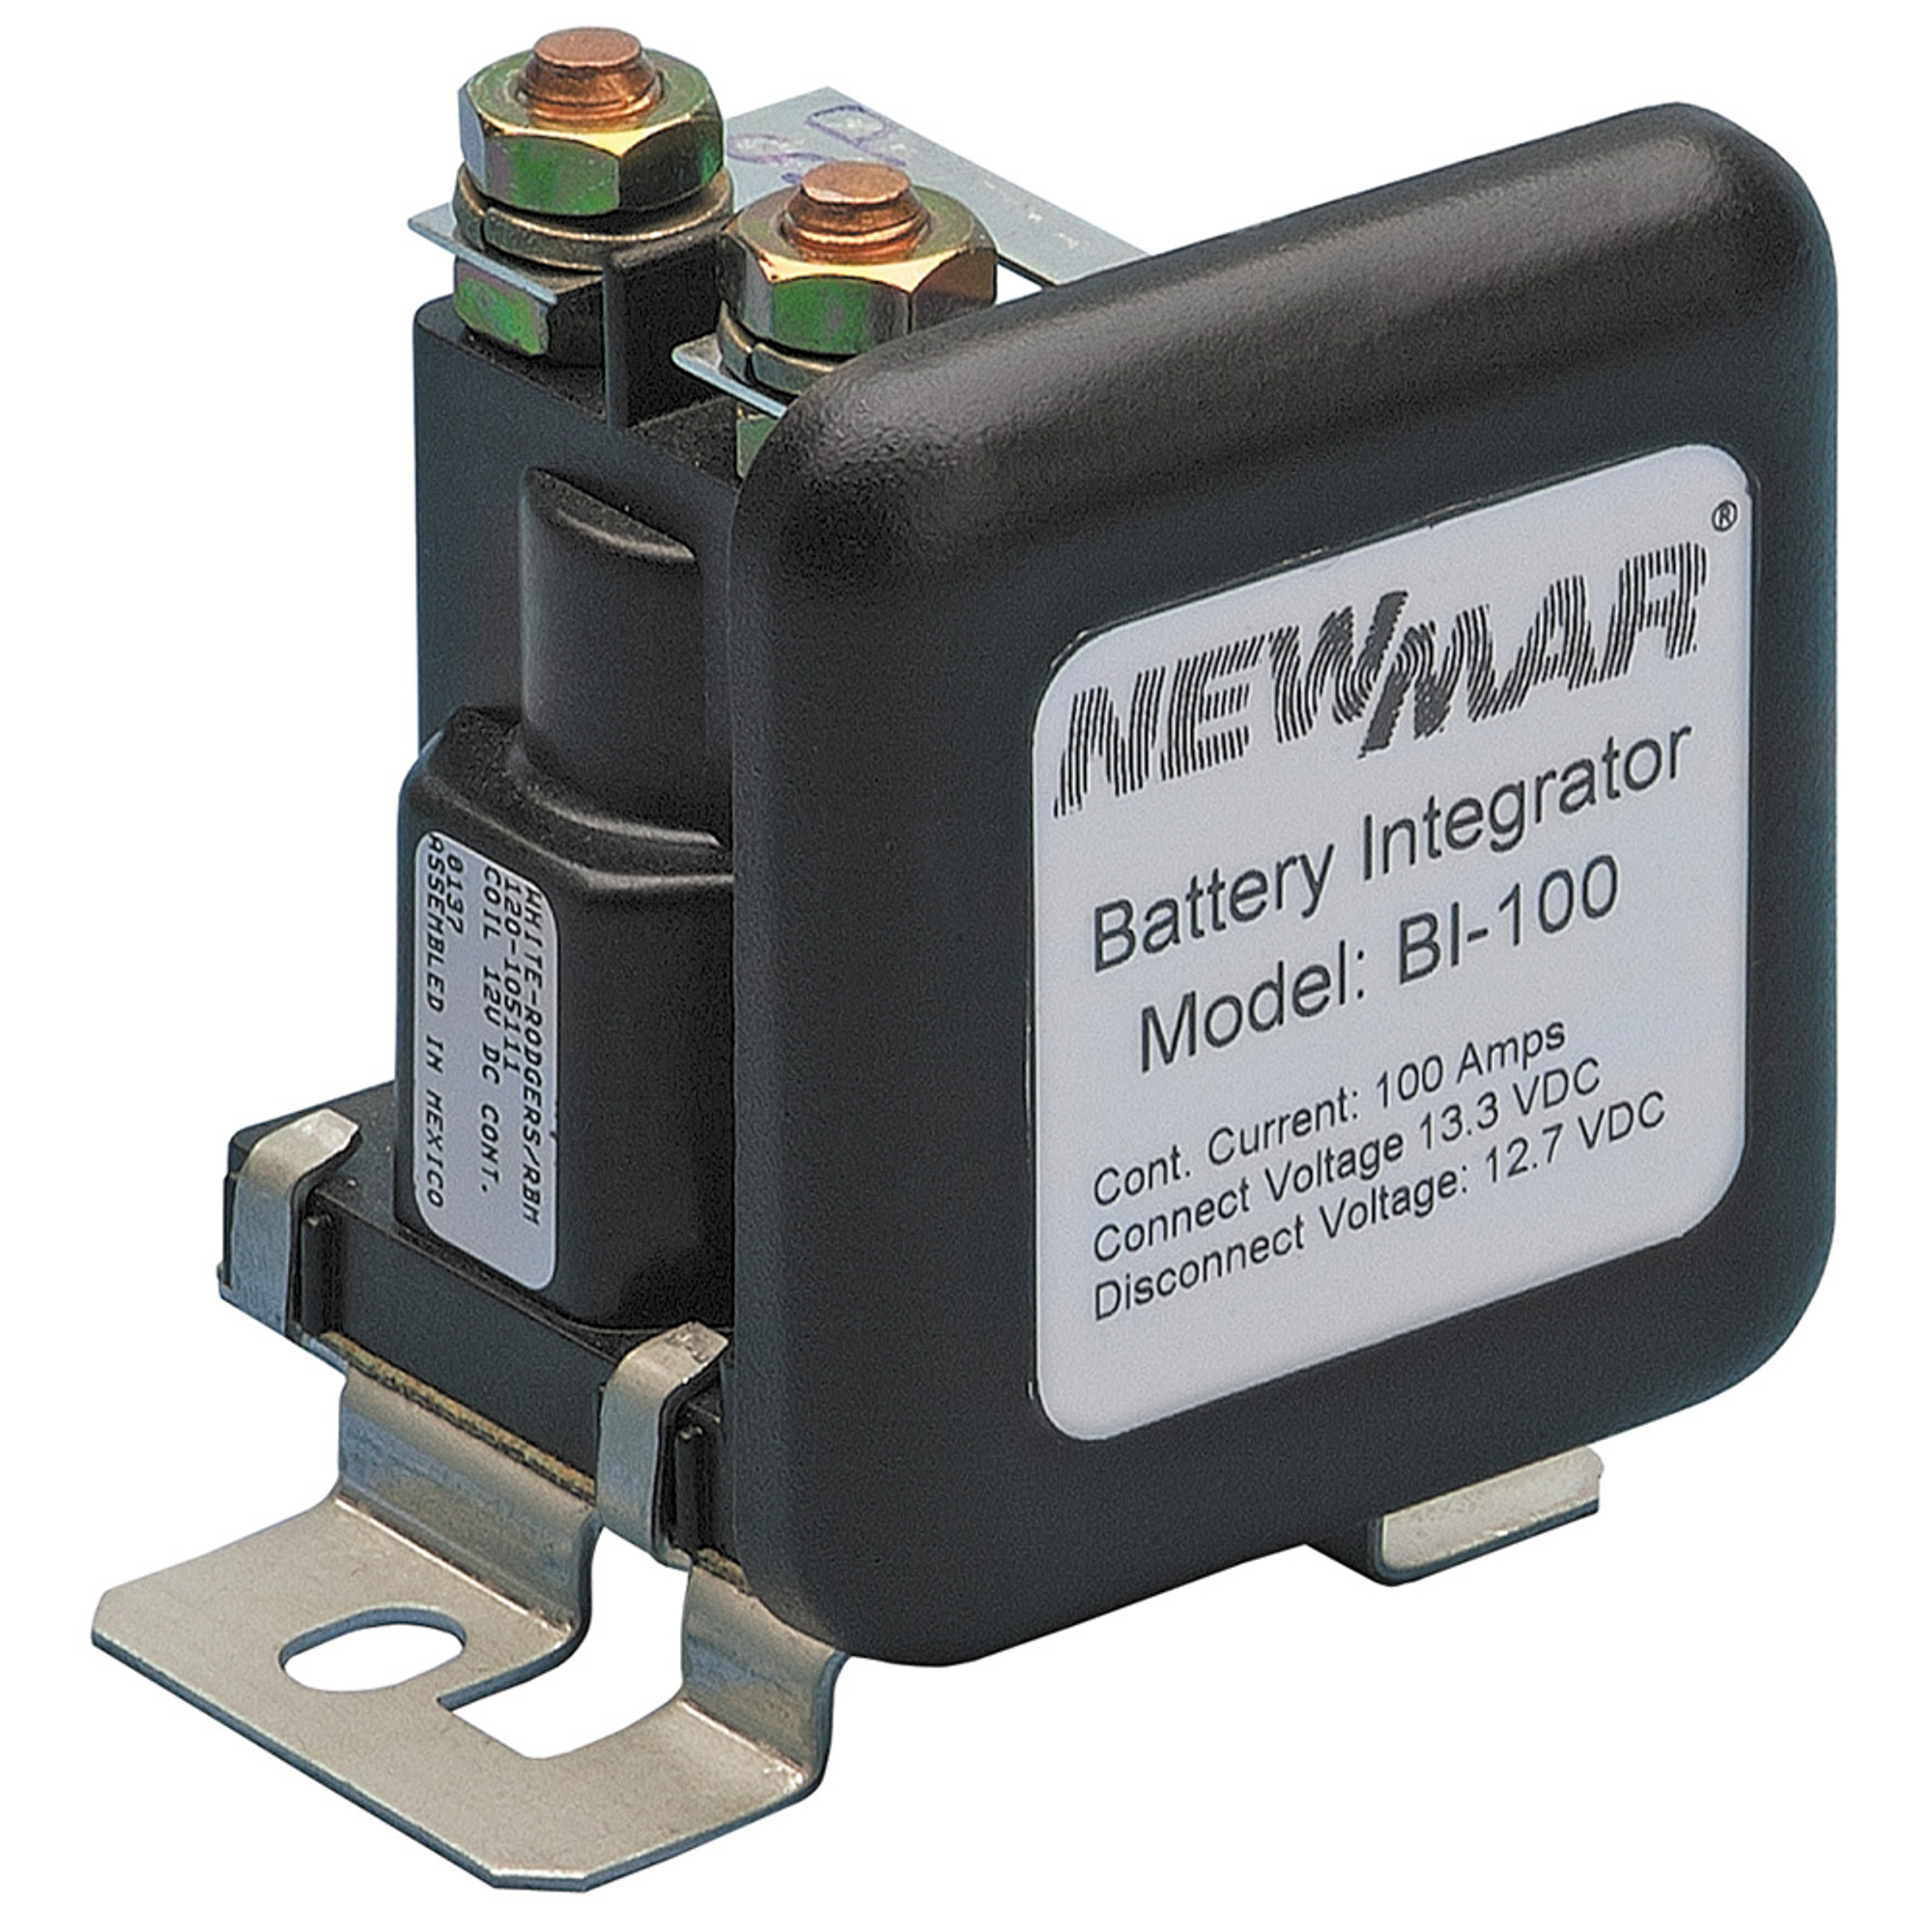 Newmar BI-100 Battery Integrator